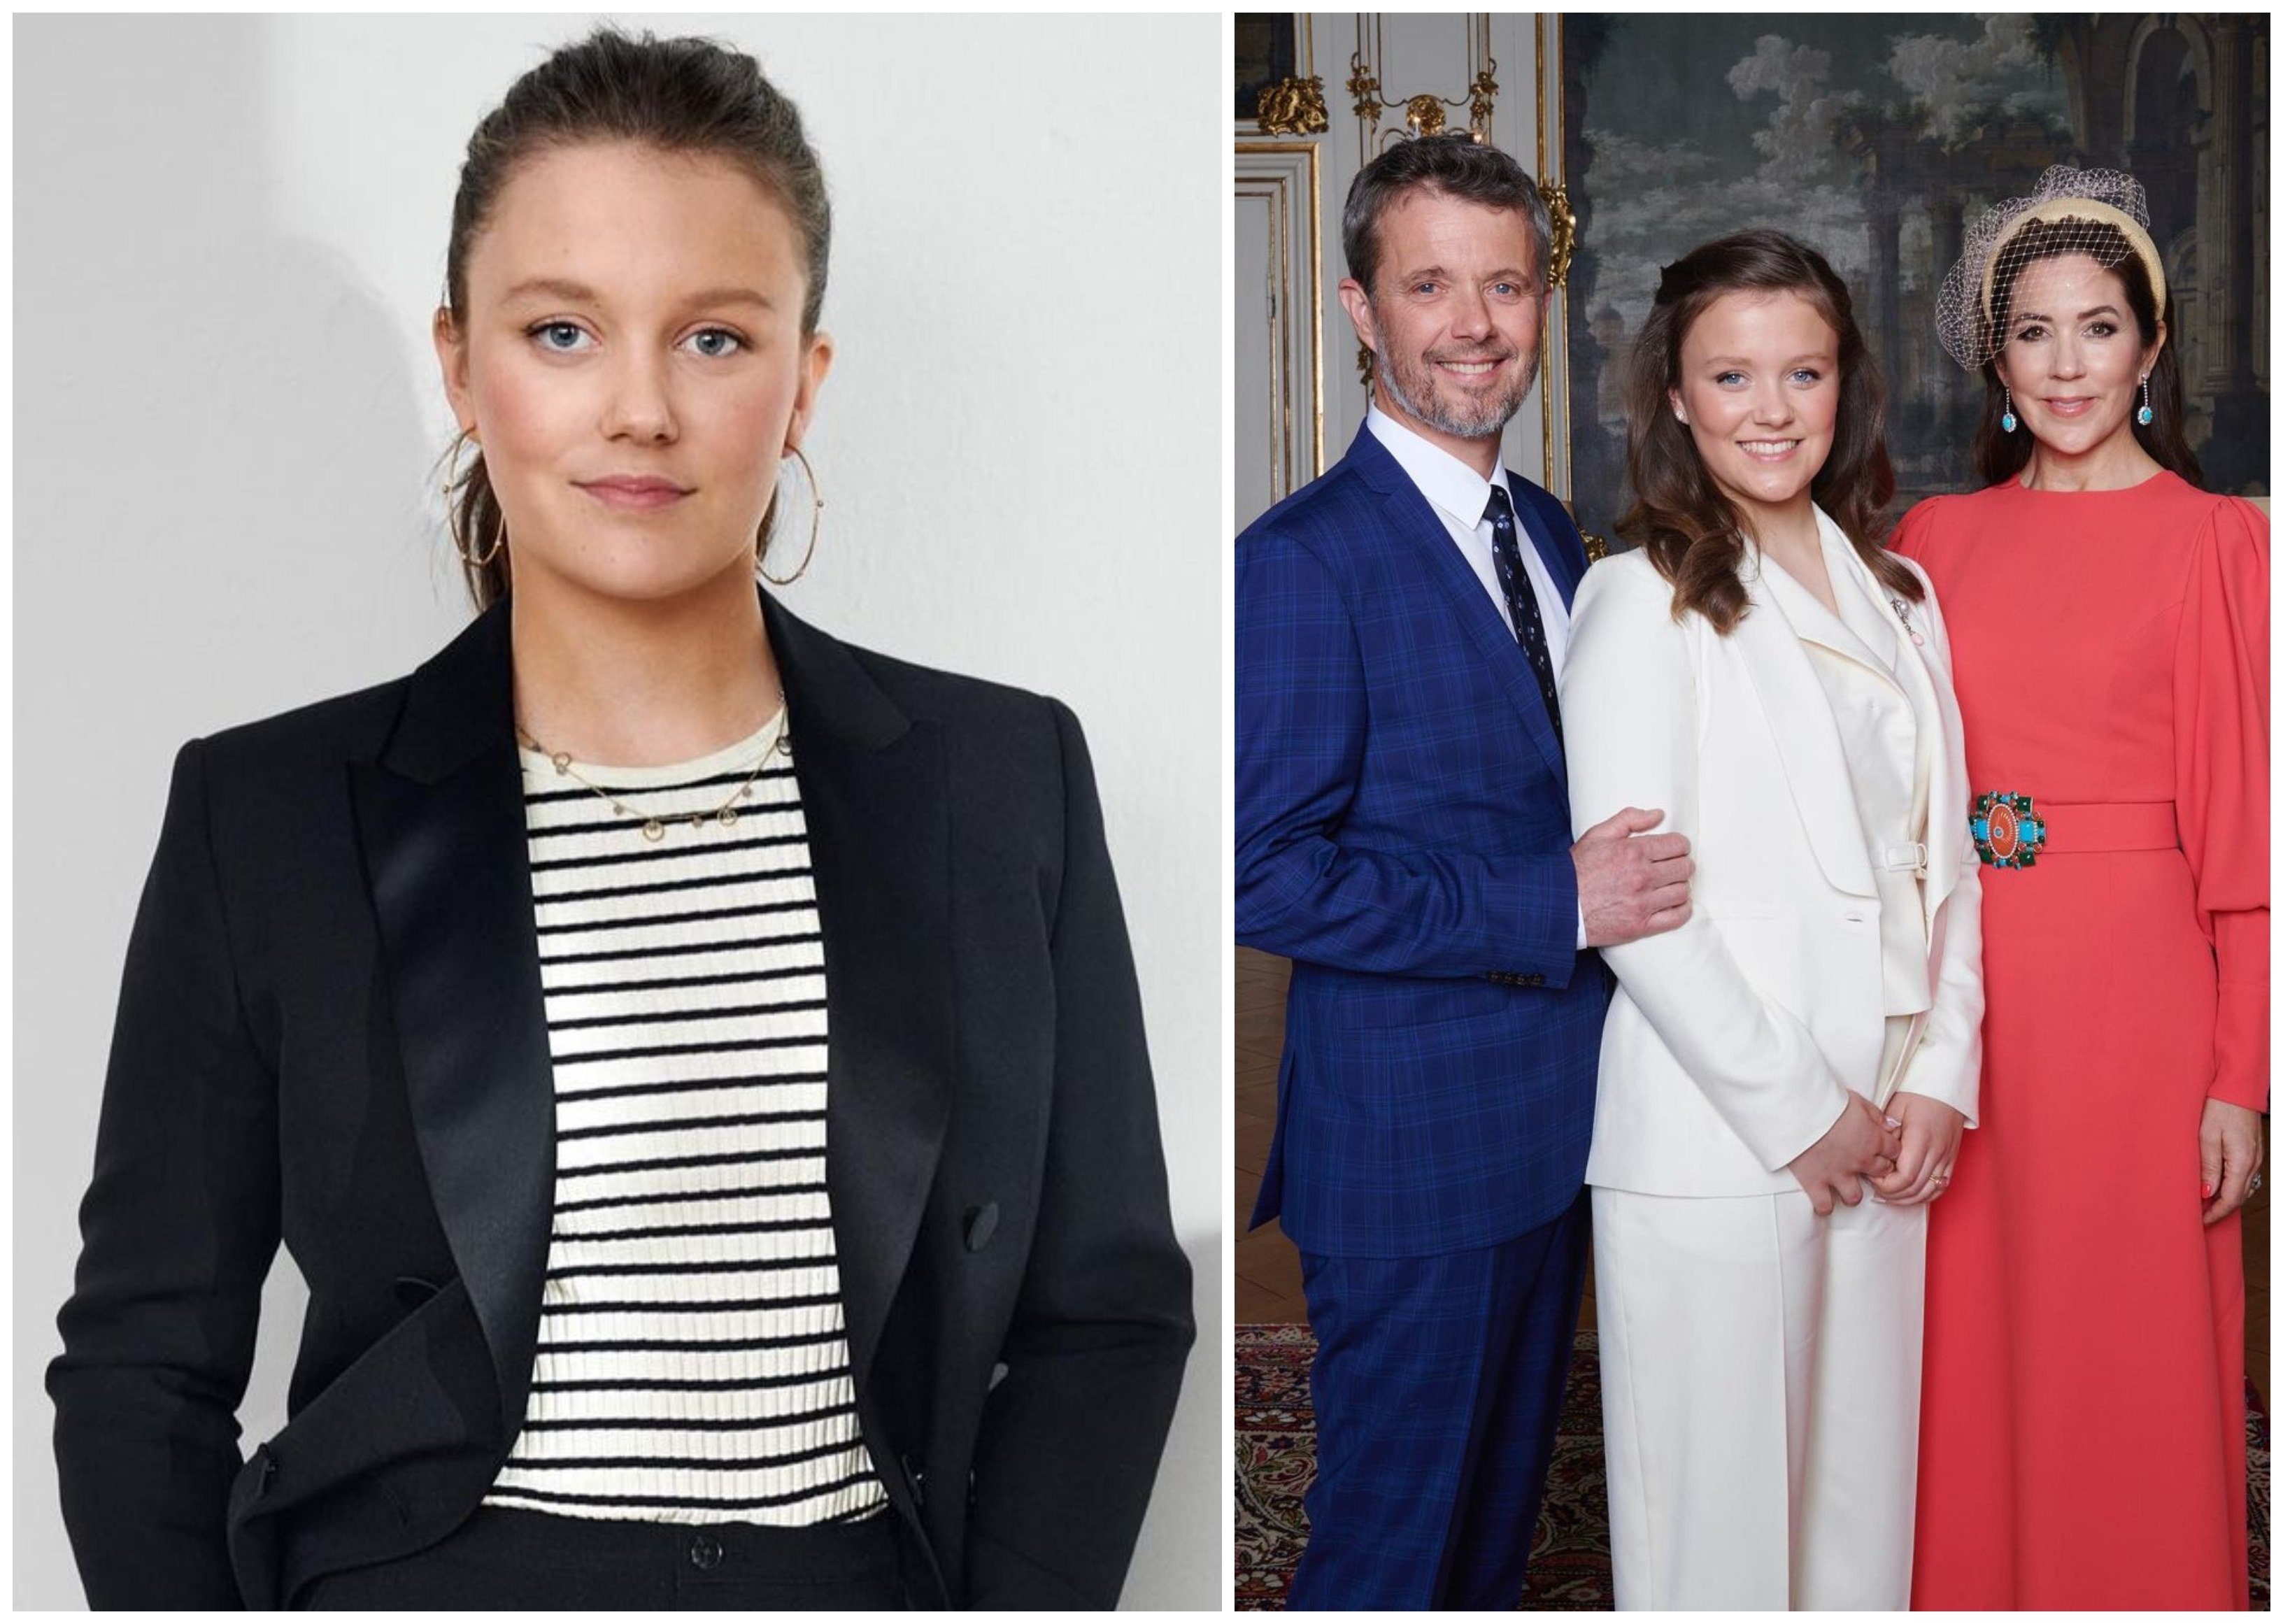 Denmark’s 15-year-old Princess Isabella is the daughter of Crown Prince Frederik and Crown Princess Mary. Photo: @detdanskekongehus/Instagram